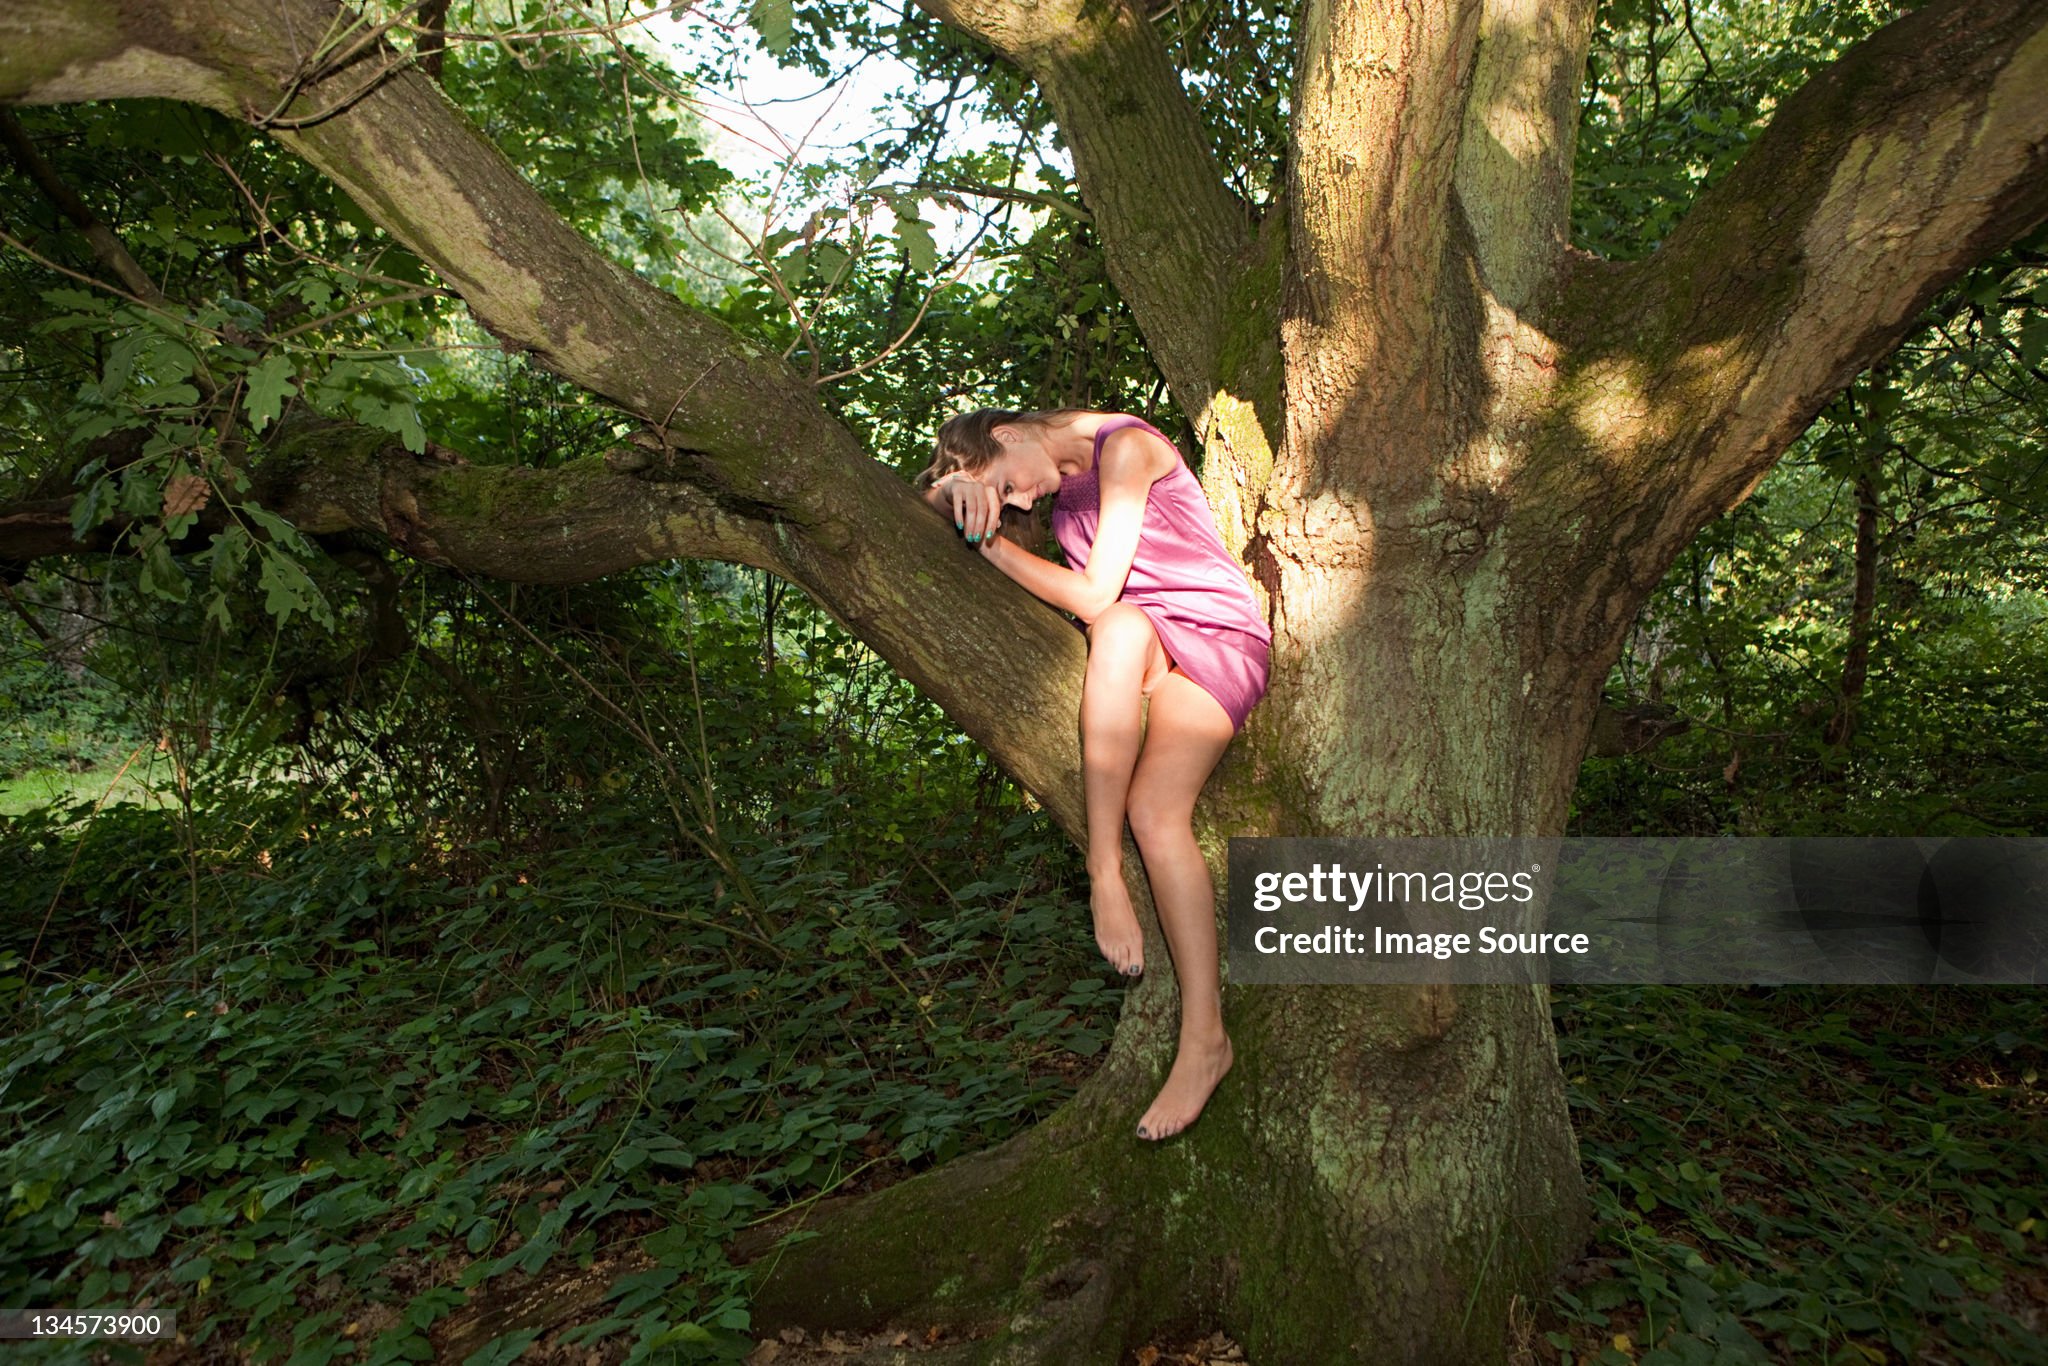 https://media.gettyimages.com/id/134573900/photo/young-woman-draped-in-an-old-oak-tree.jpg?s=2048x2048&amp;w=gi&amp;k=20&amp;c=aHZYmVTTy4ELFAxaRIMWxbHTQNhy5NVEg4hNg5mbYik=